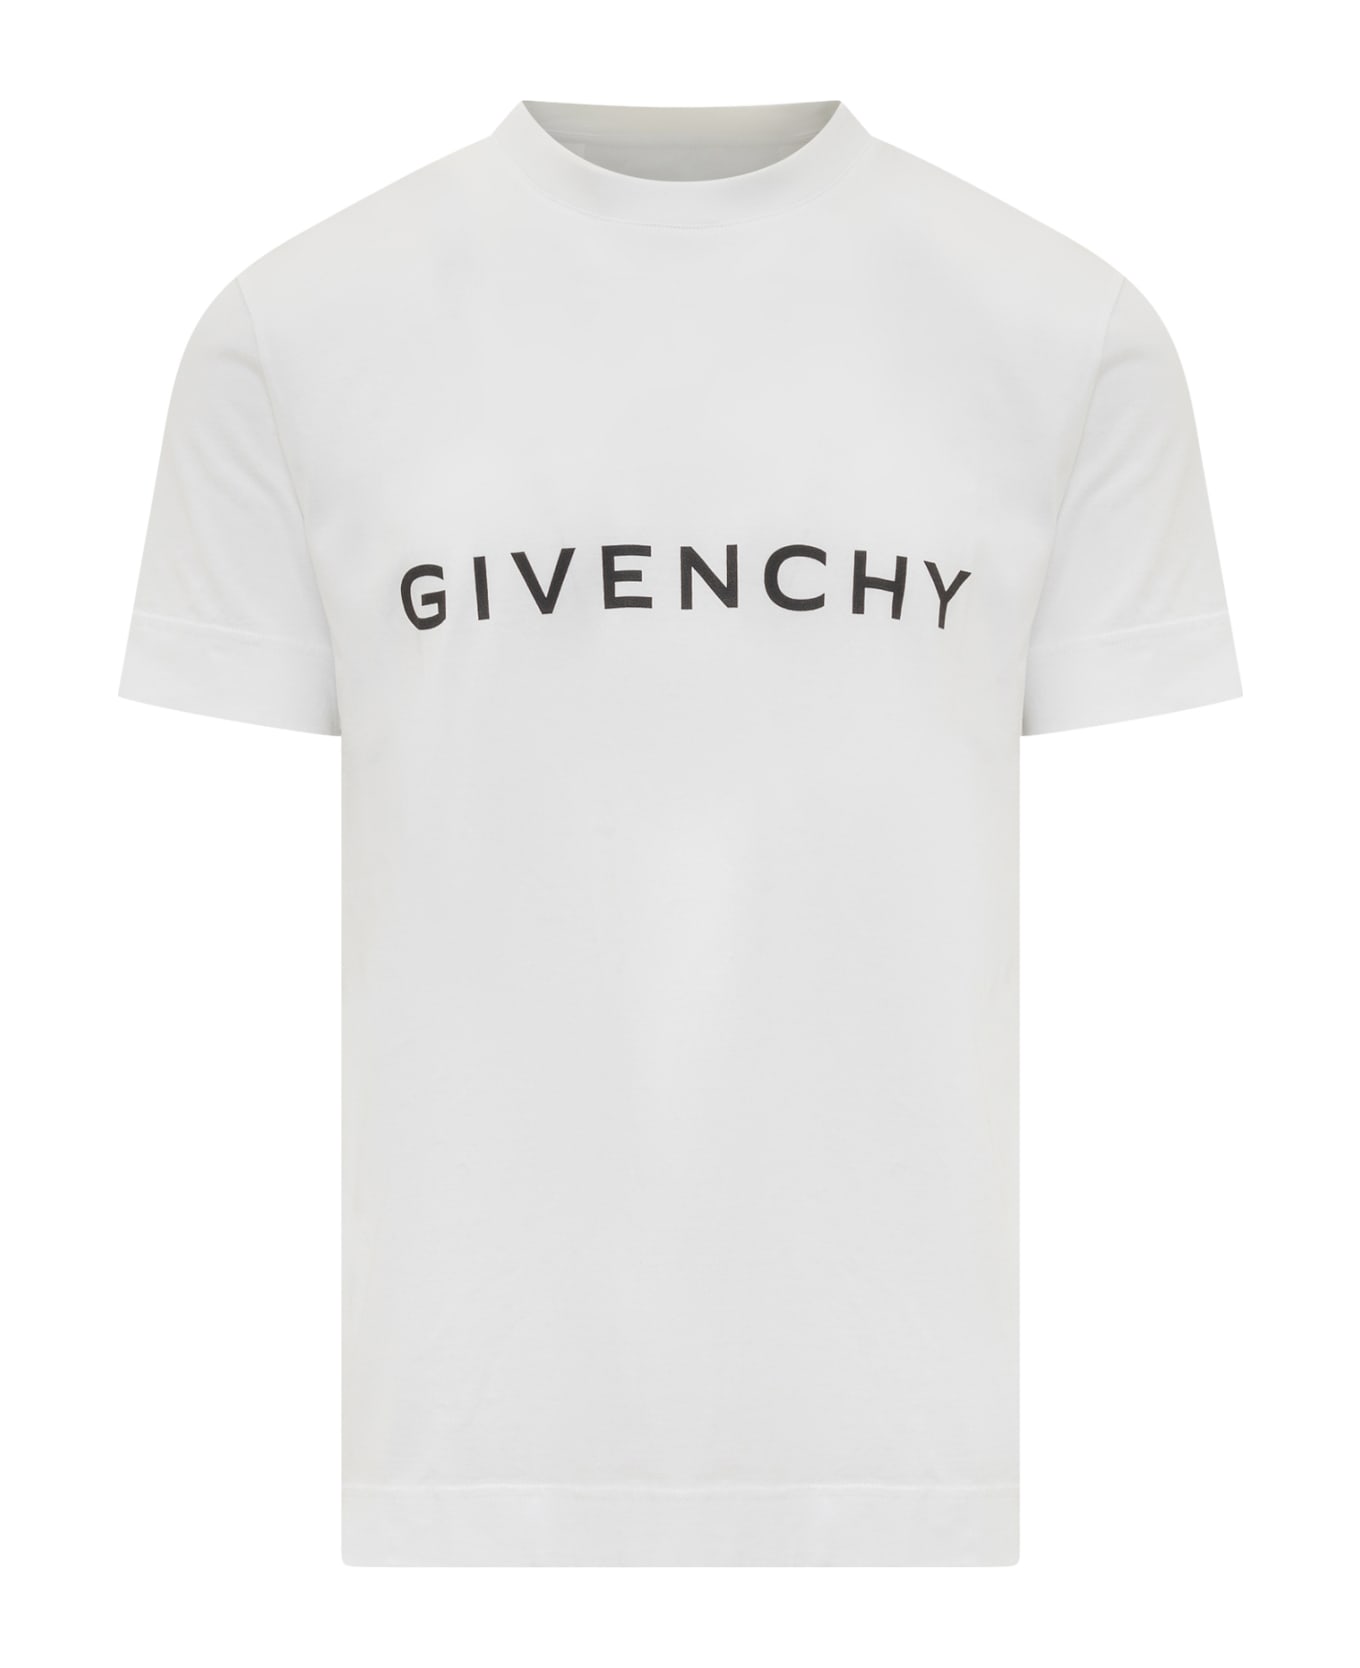 Givenchy Cotton Crew-neck T-shirt - White